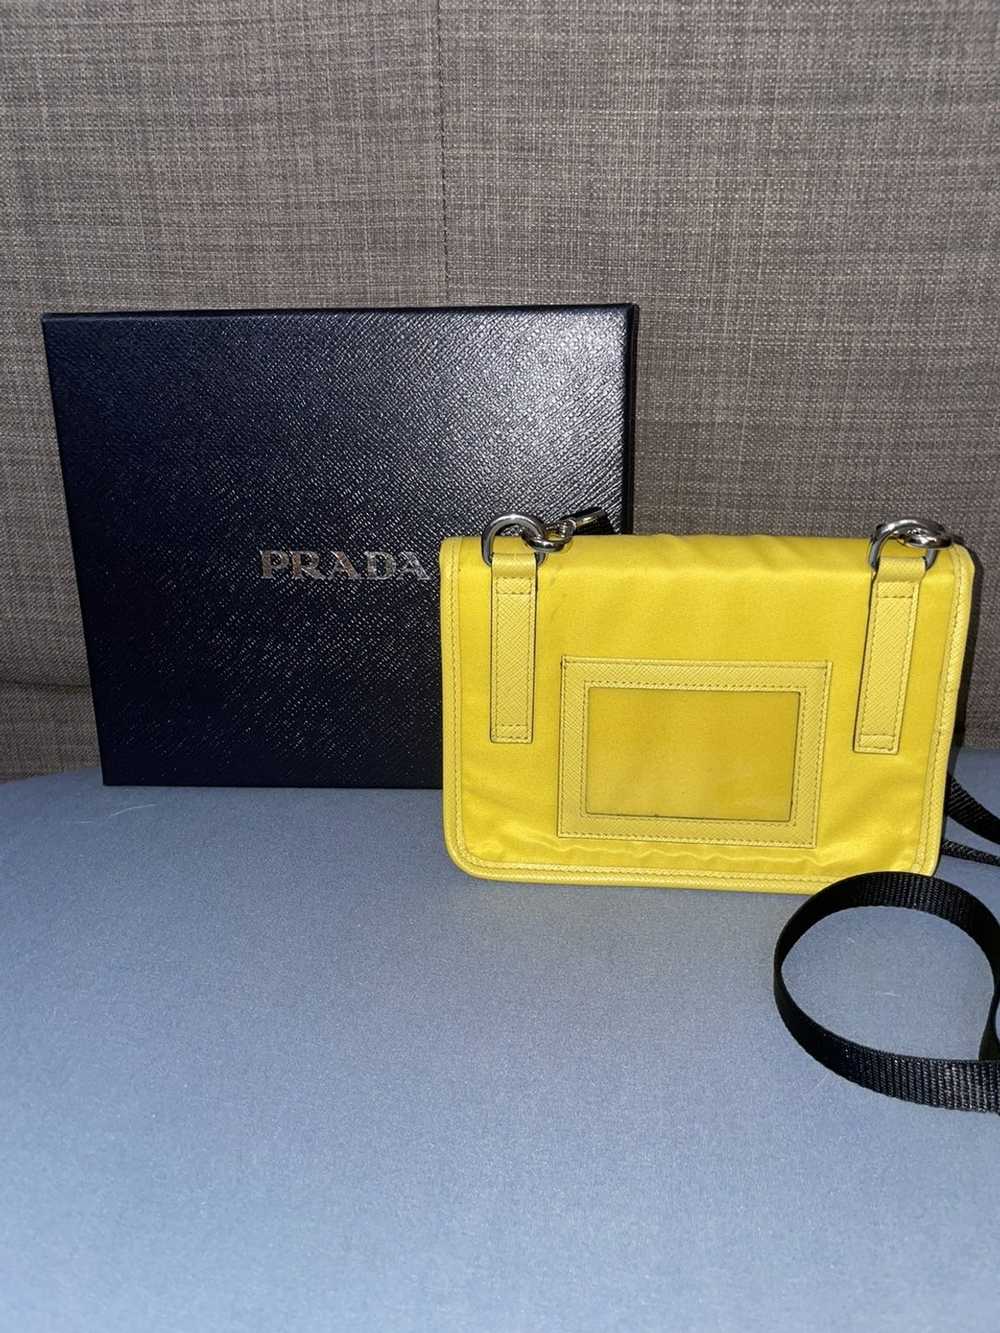 Prada Prada bag - image 3